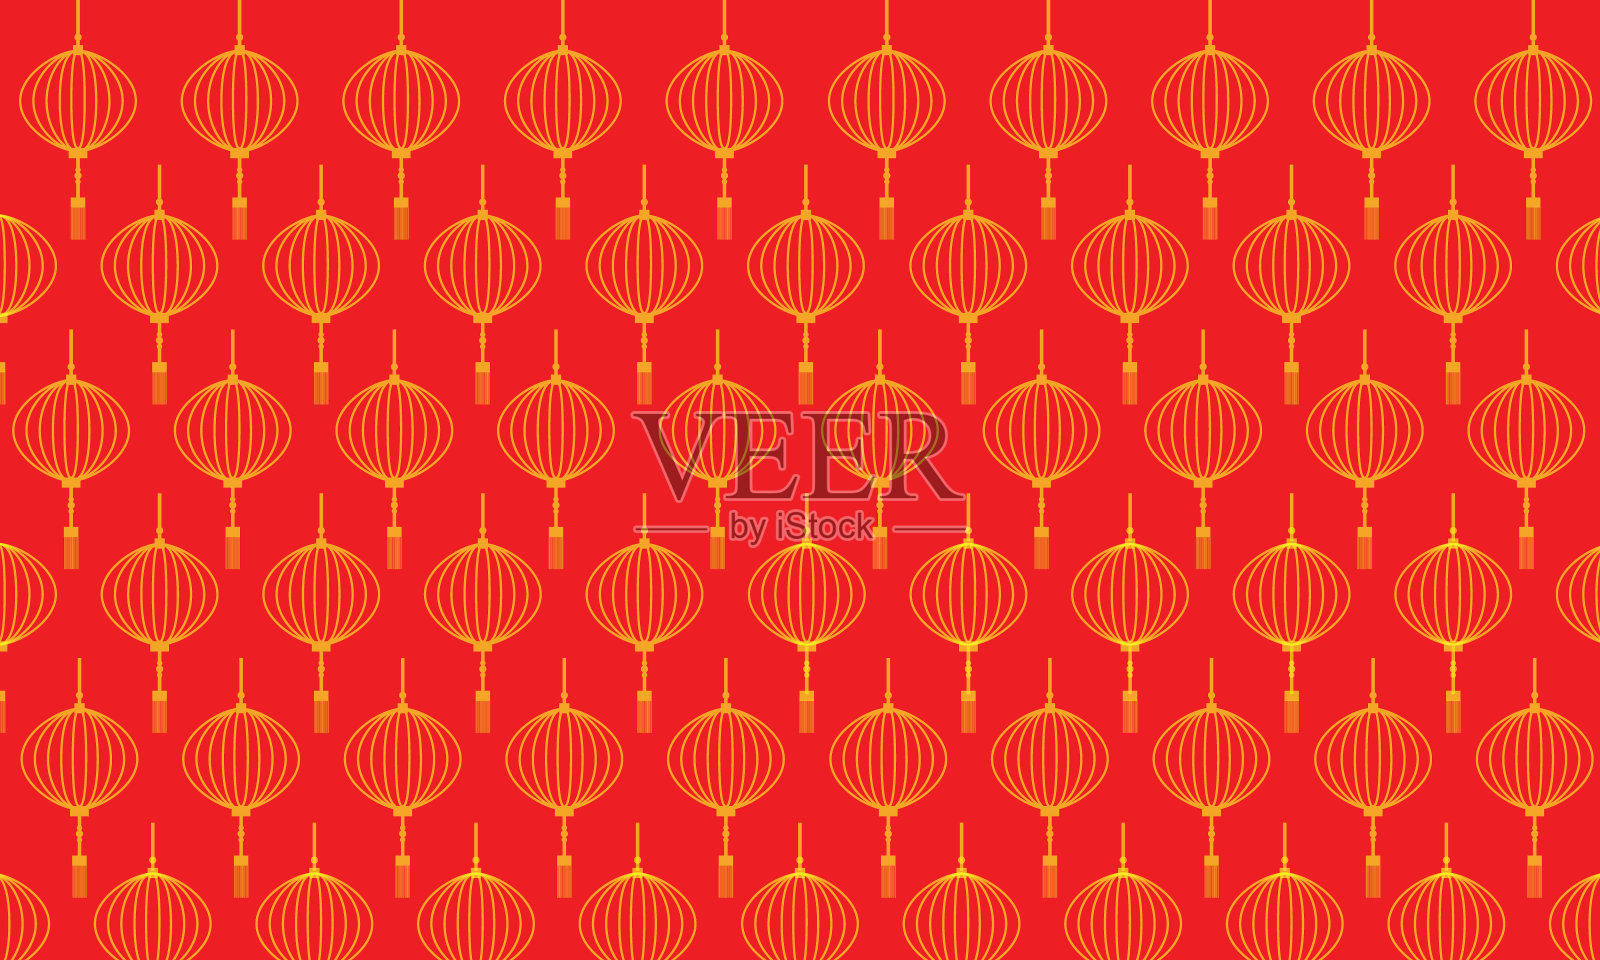 Happy chinese new year symbol 2019模板横幅，海报，贺卡。壁纸花朵图案。矢量插图，中国庆祝插画图片素材